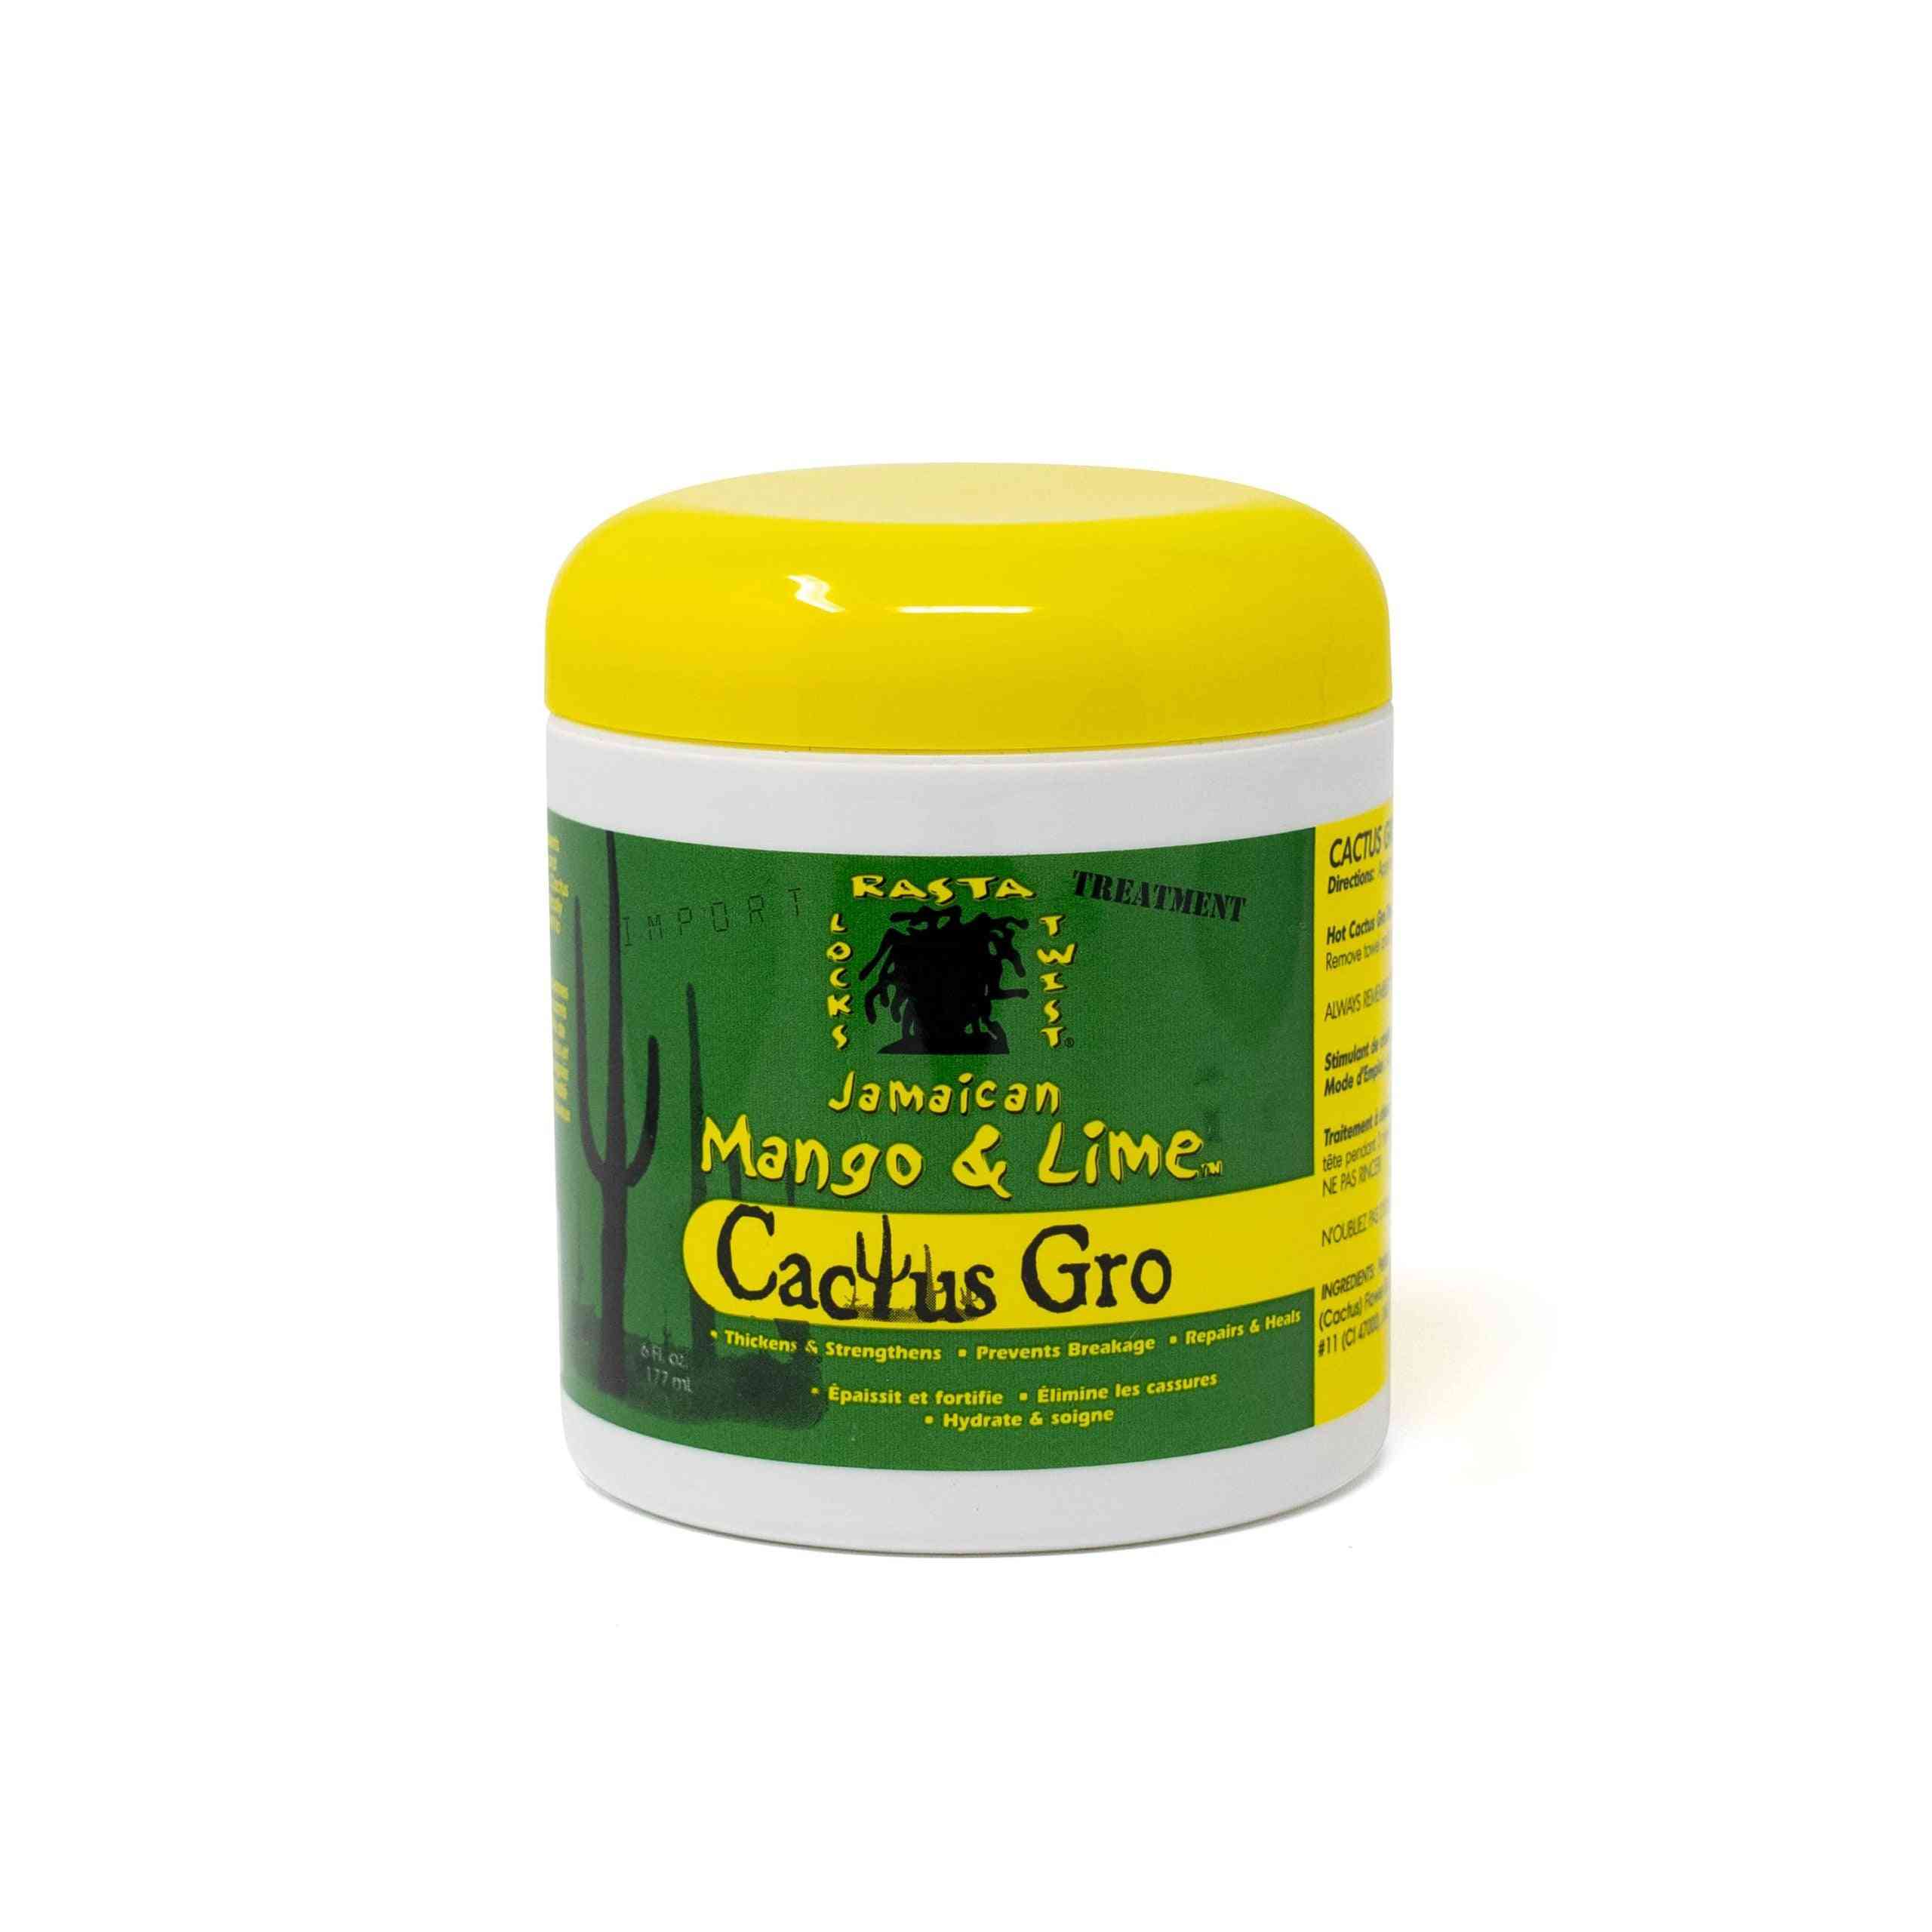 Mangue jamaïcaine et citron vert cactus gro 6 oz